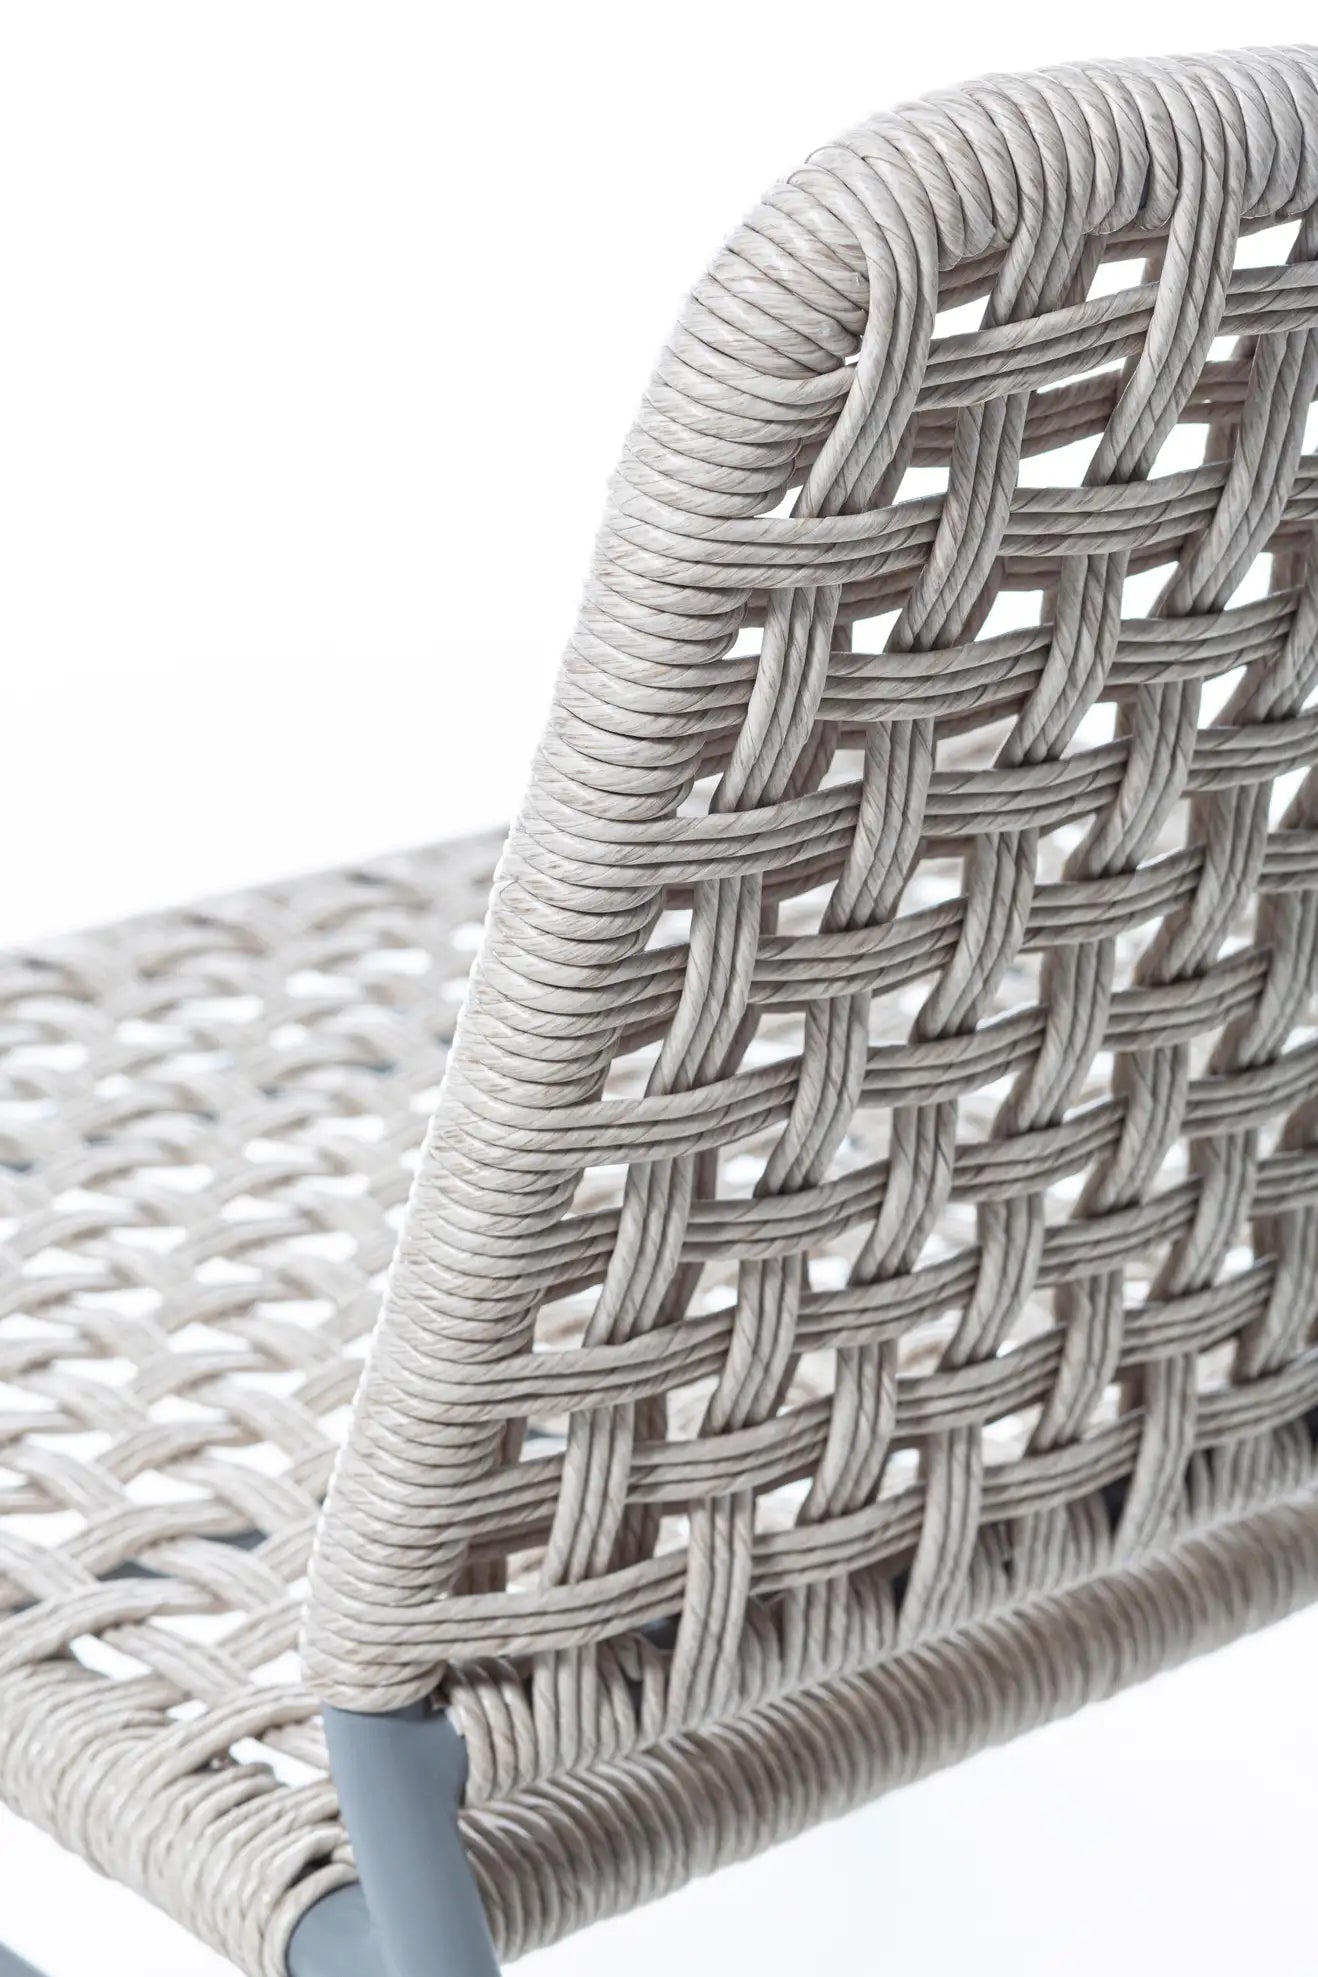 Gervasoni Straw Chair in Light Grey Aluminium Frame with Woven Resin Fiber Seat $998.00